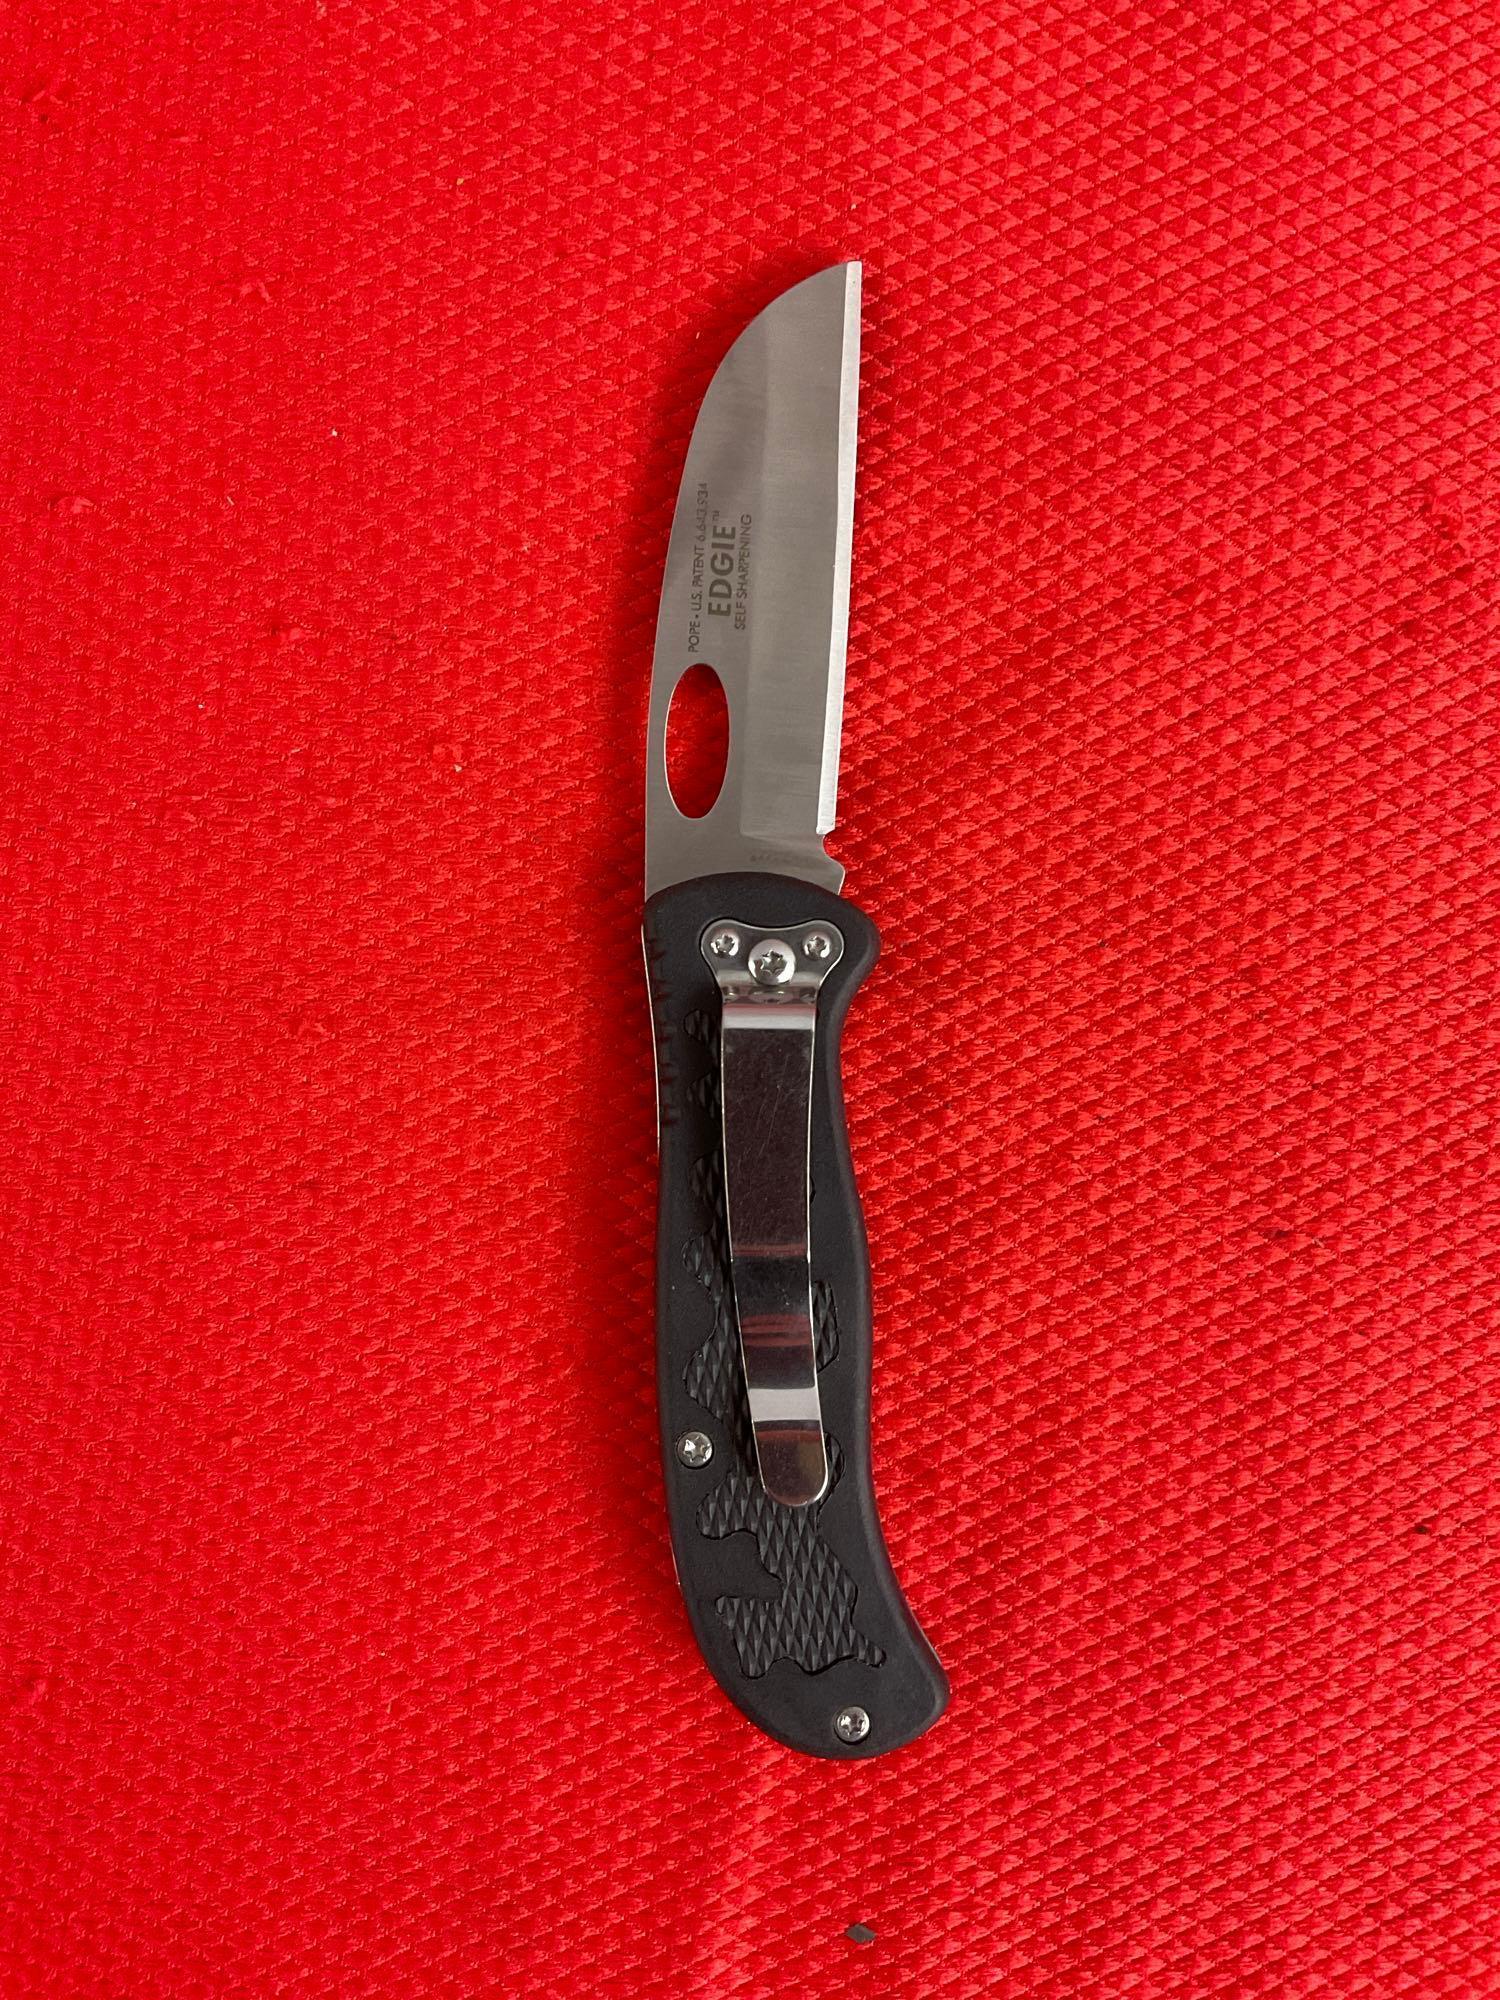 CRKT "Edgie" 3" 420J2 Steel Self-Sharpening Slip Joint Folding Knife Model 6442. NIB. See pics.